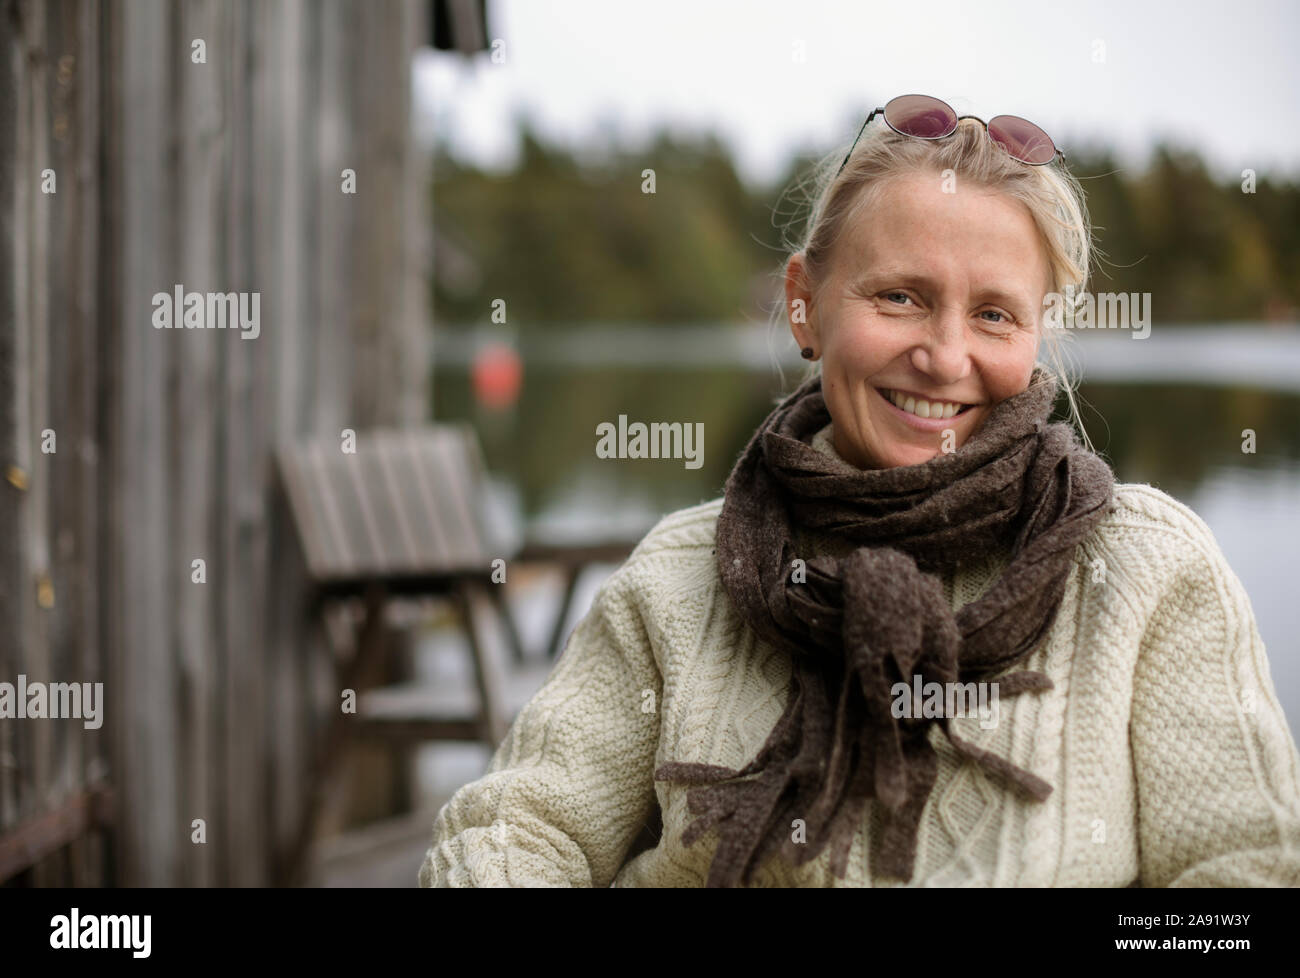 Smiling woman looking at camera Banque D'Images